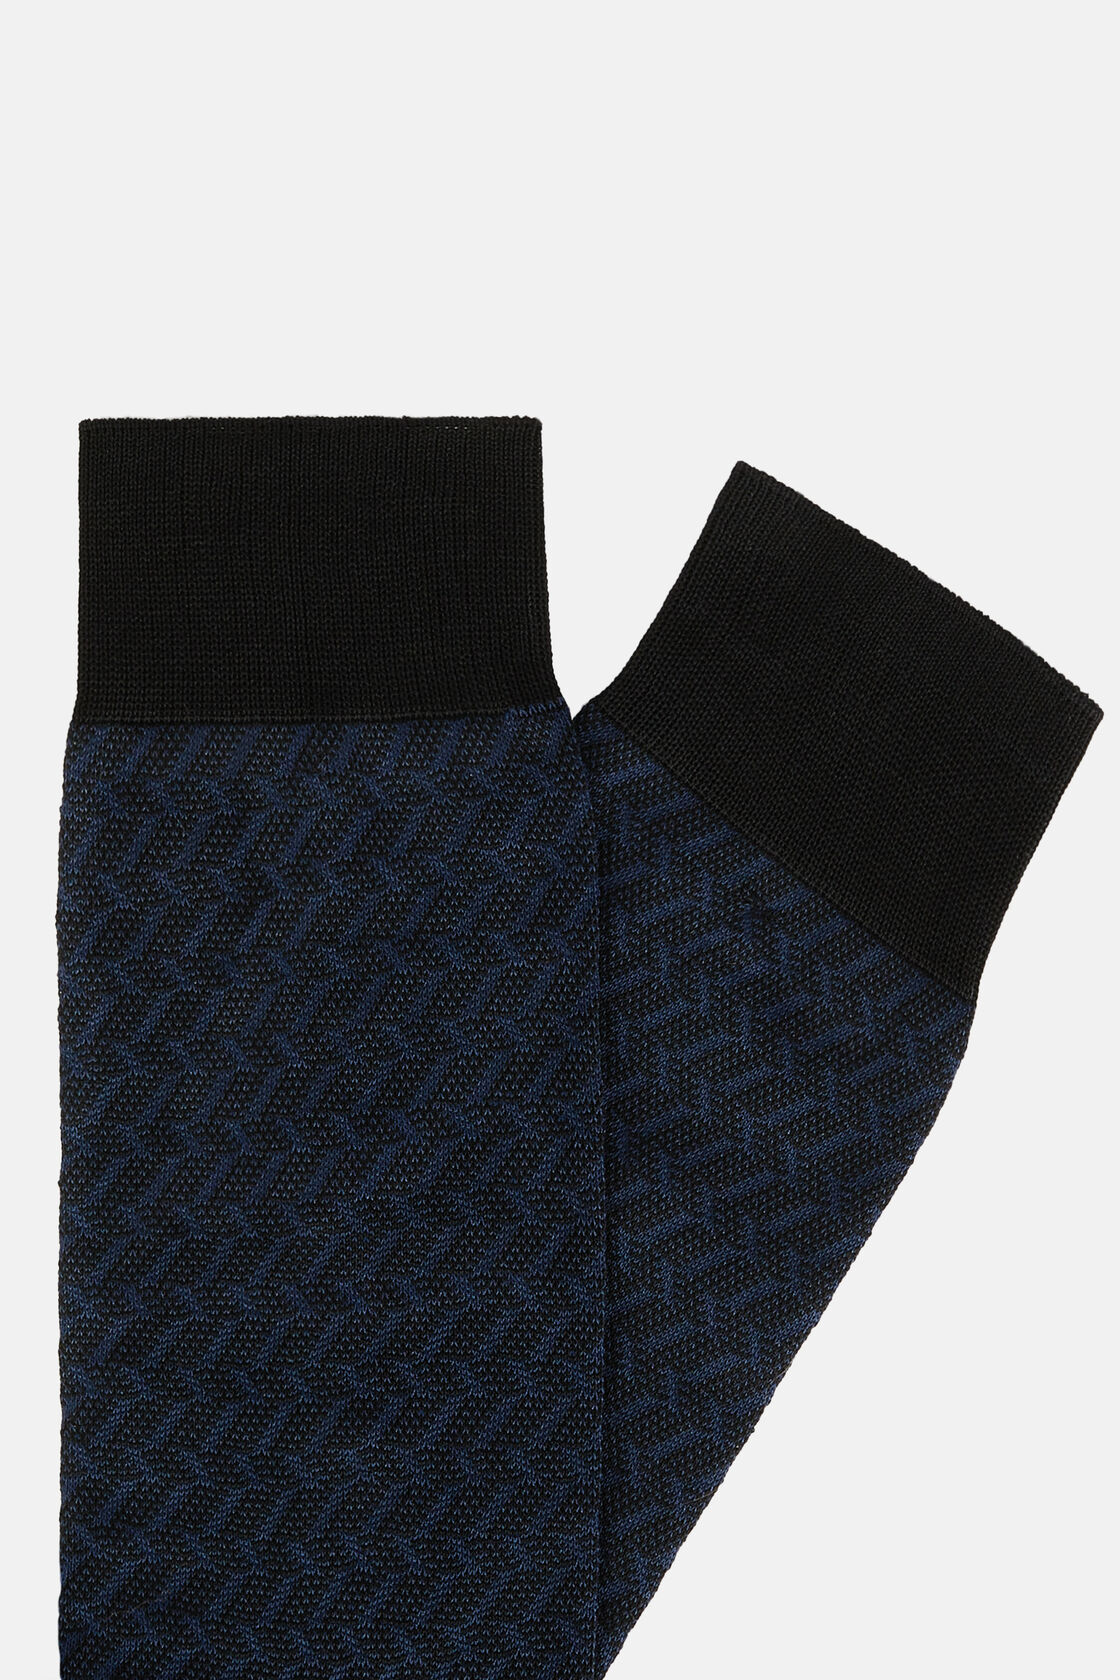 Skarpetki w drobny wzór z mieszanki bawełny, Navy blue, hi-res